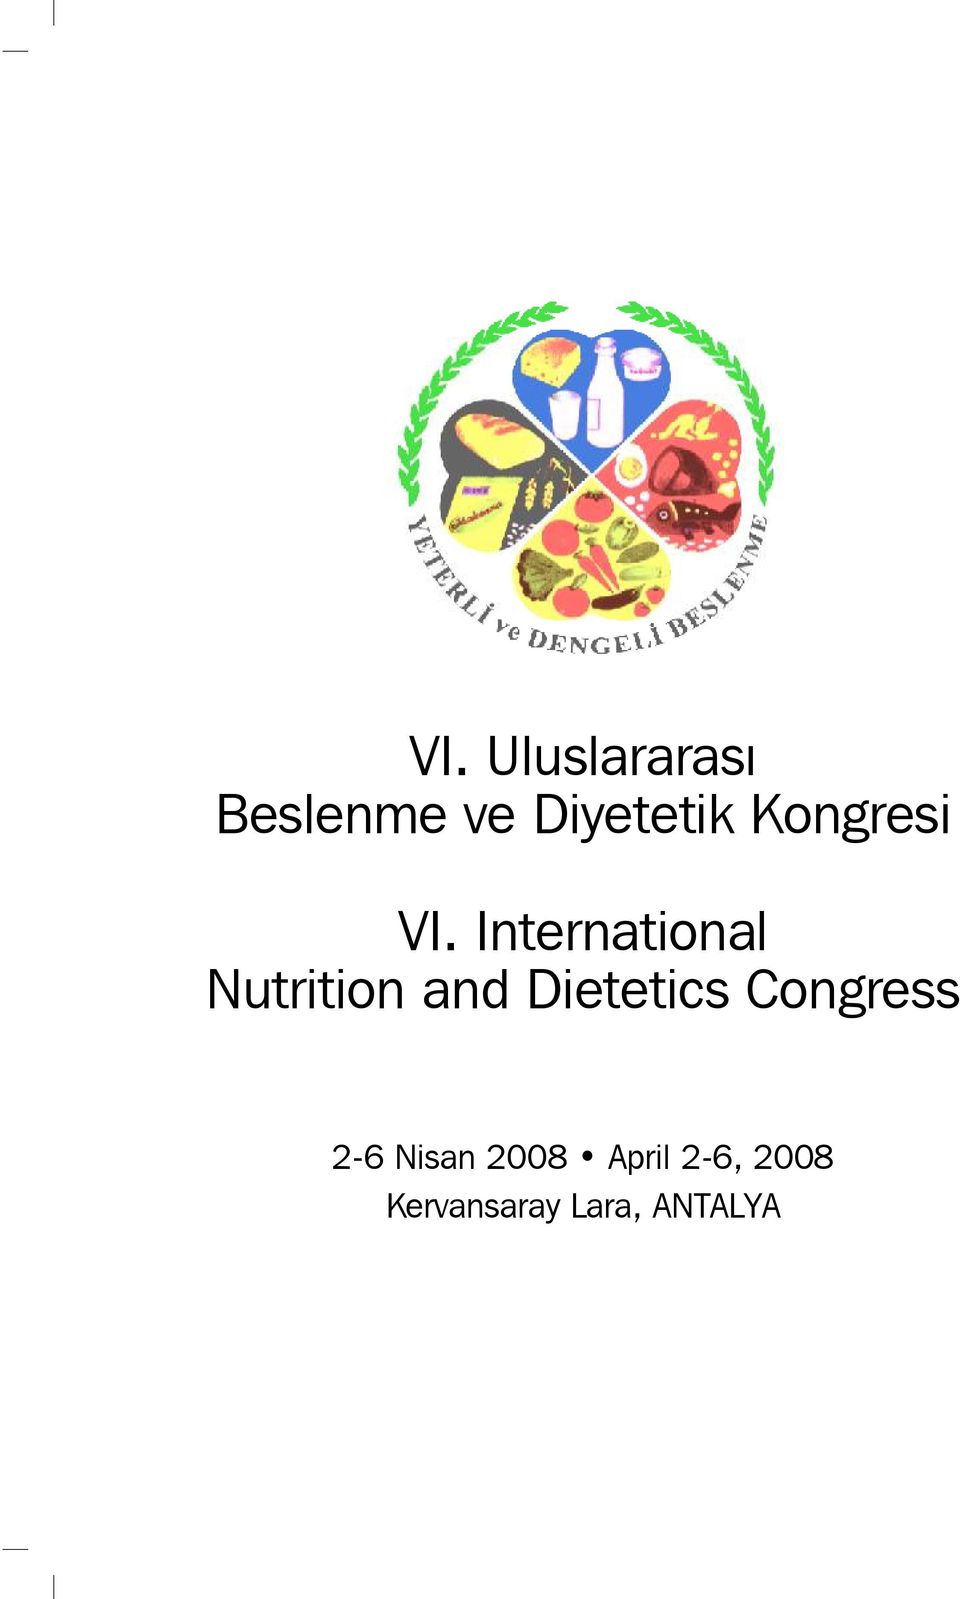 International Nutrition and Dietetics